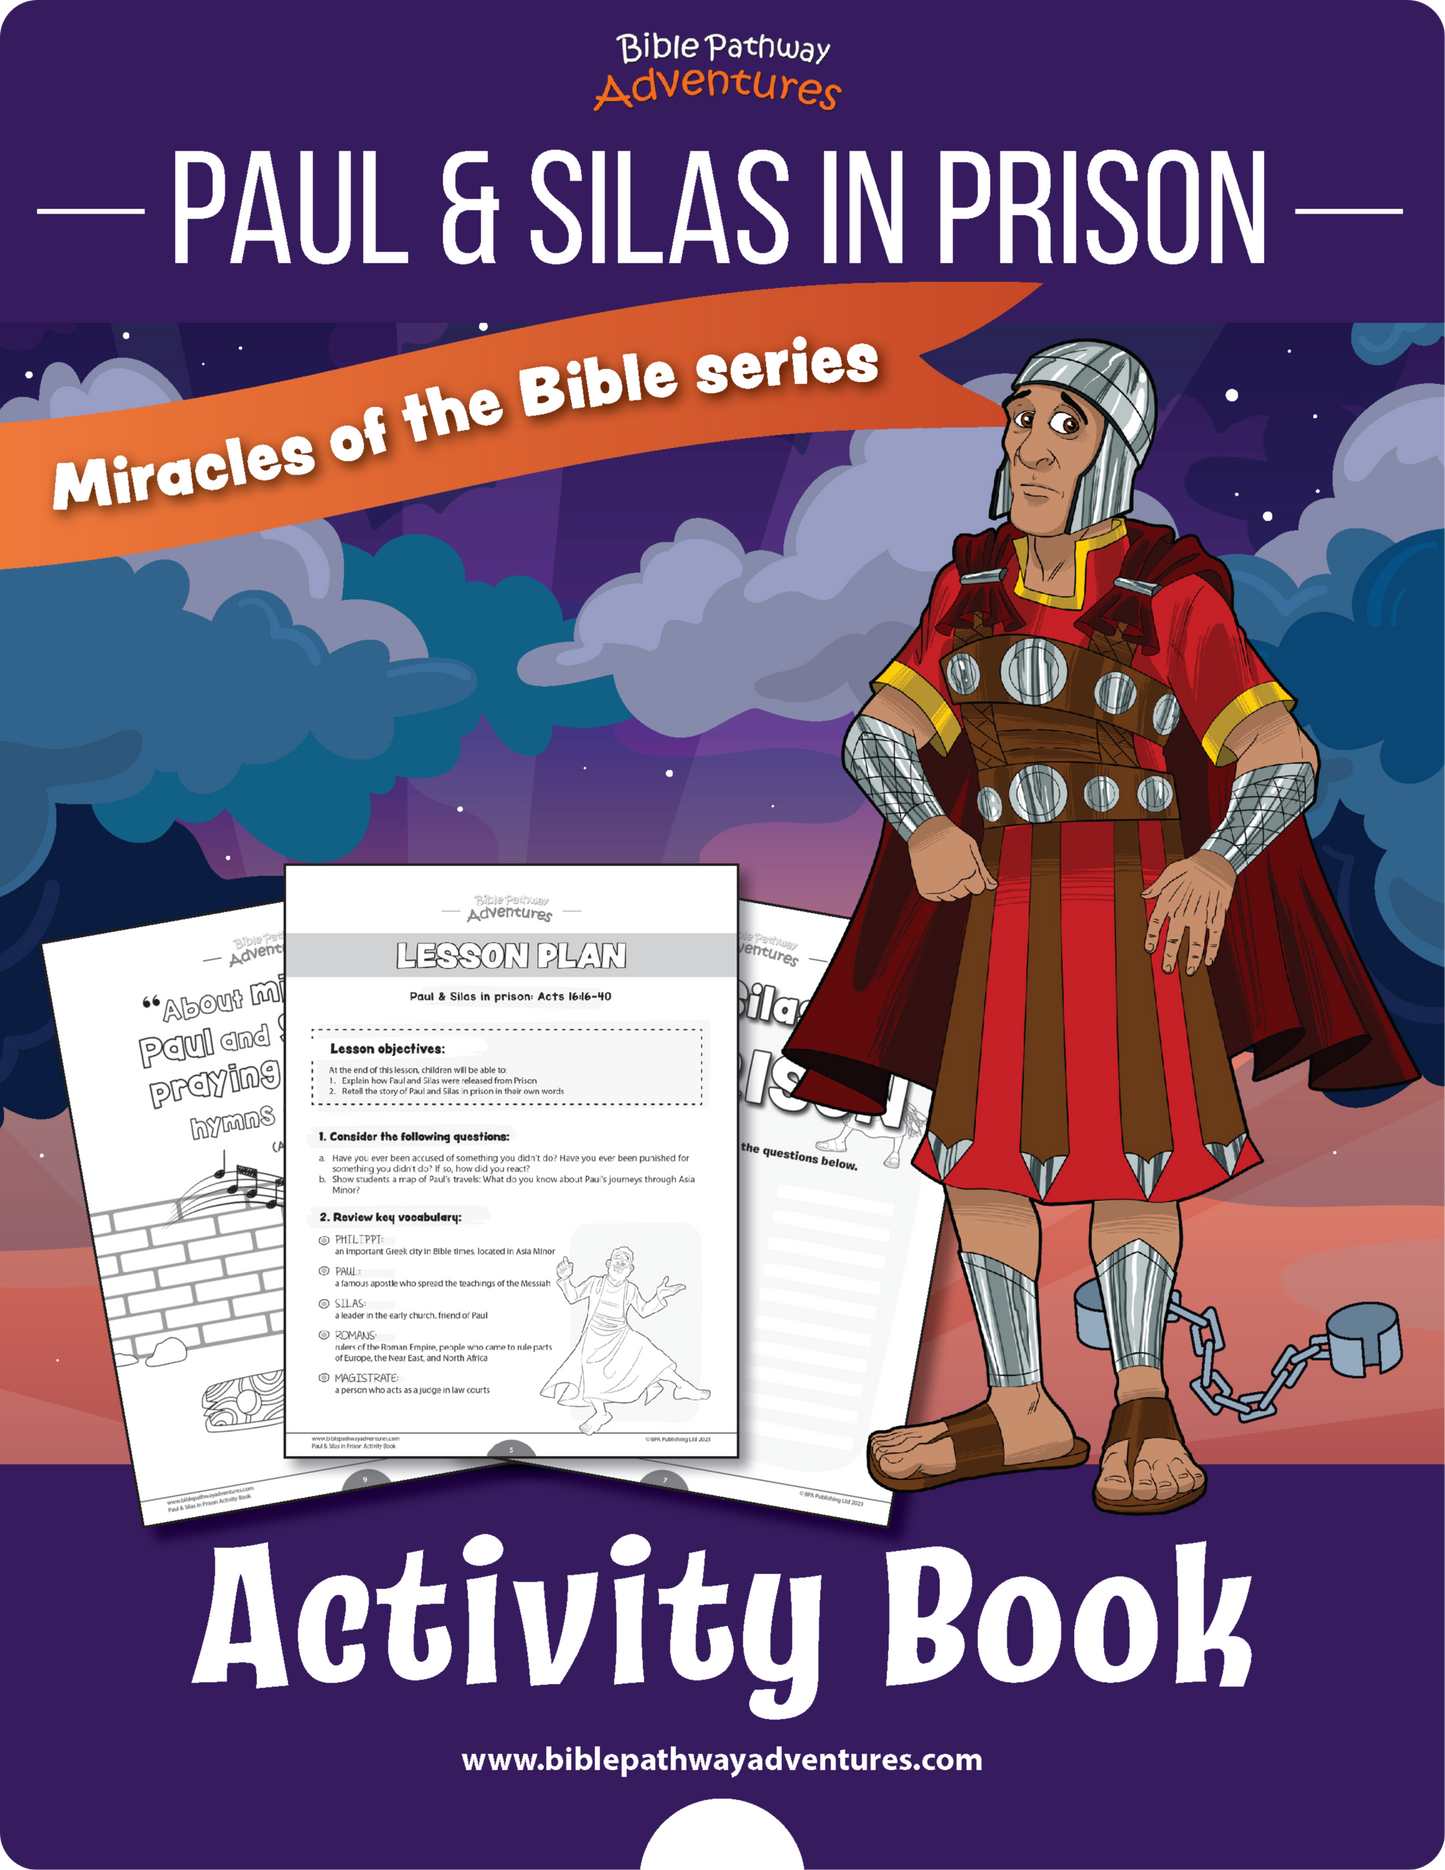 Paul & Silas in Prison Activity Book